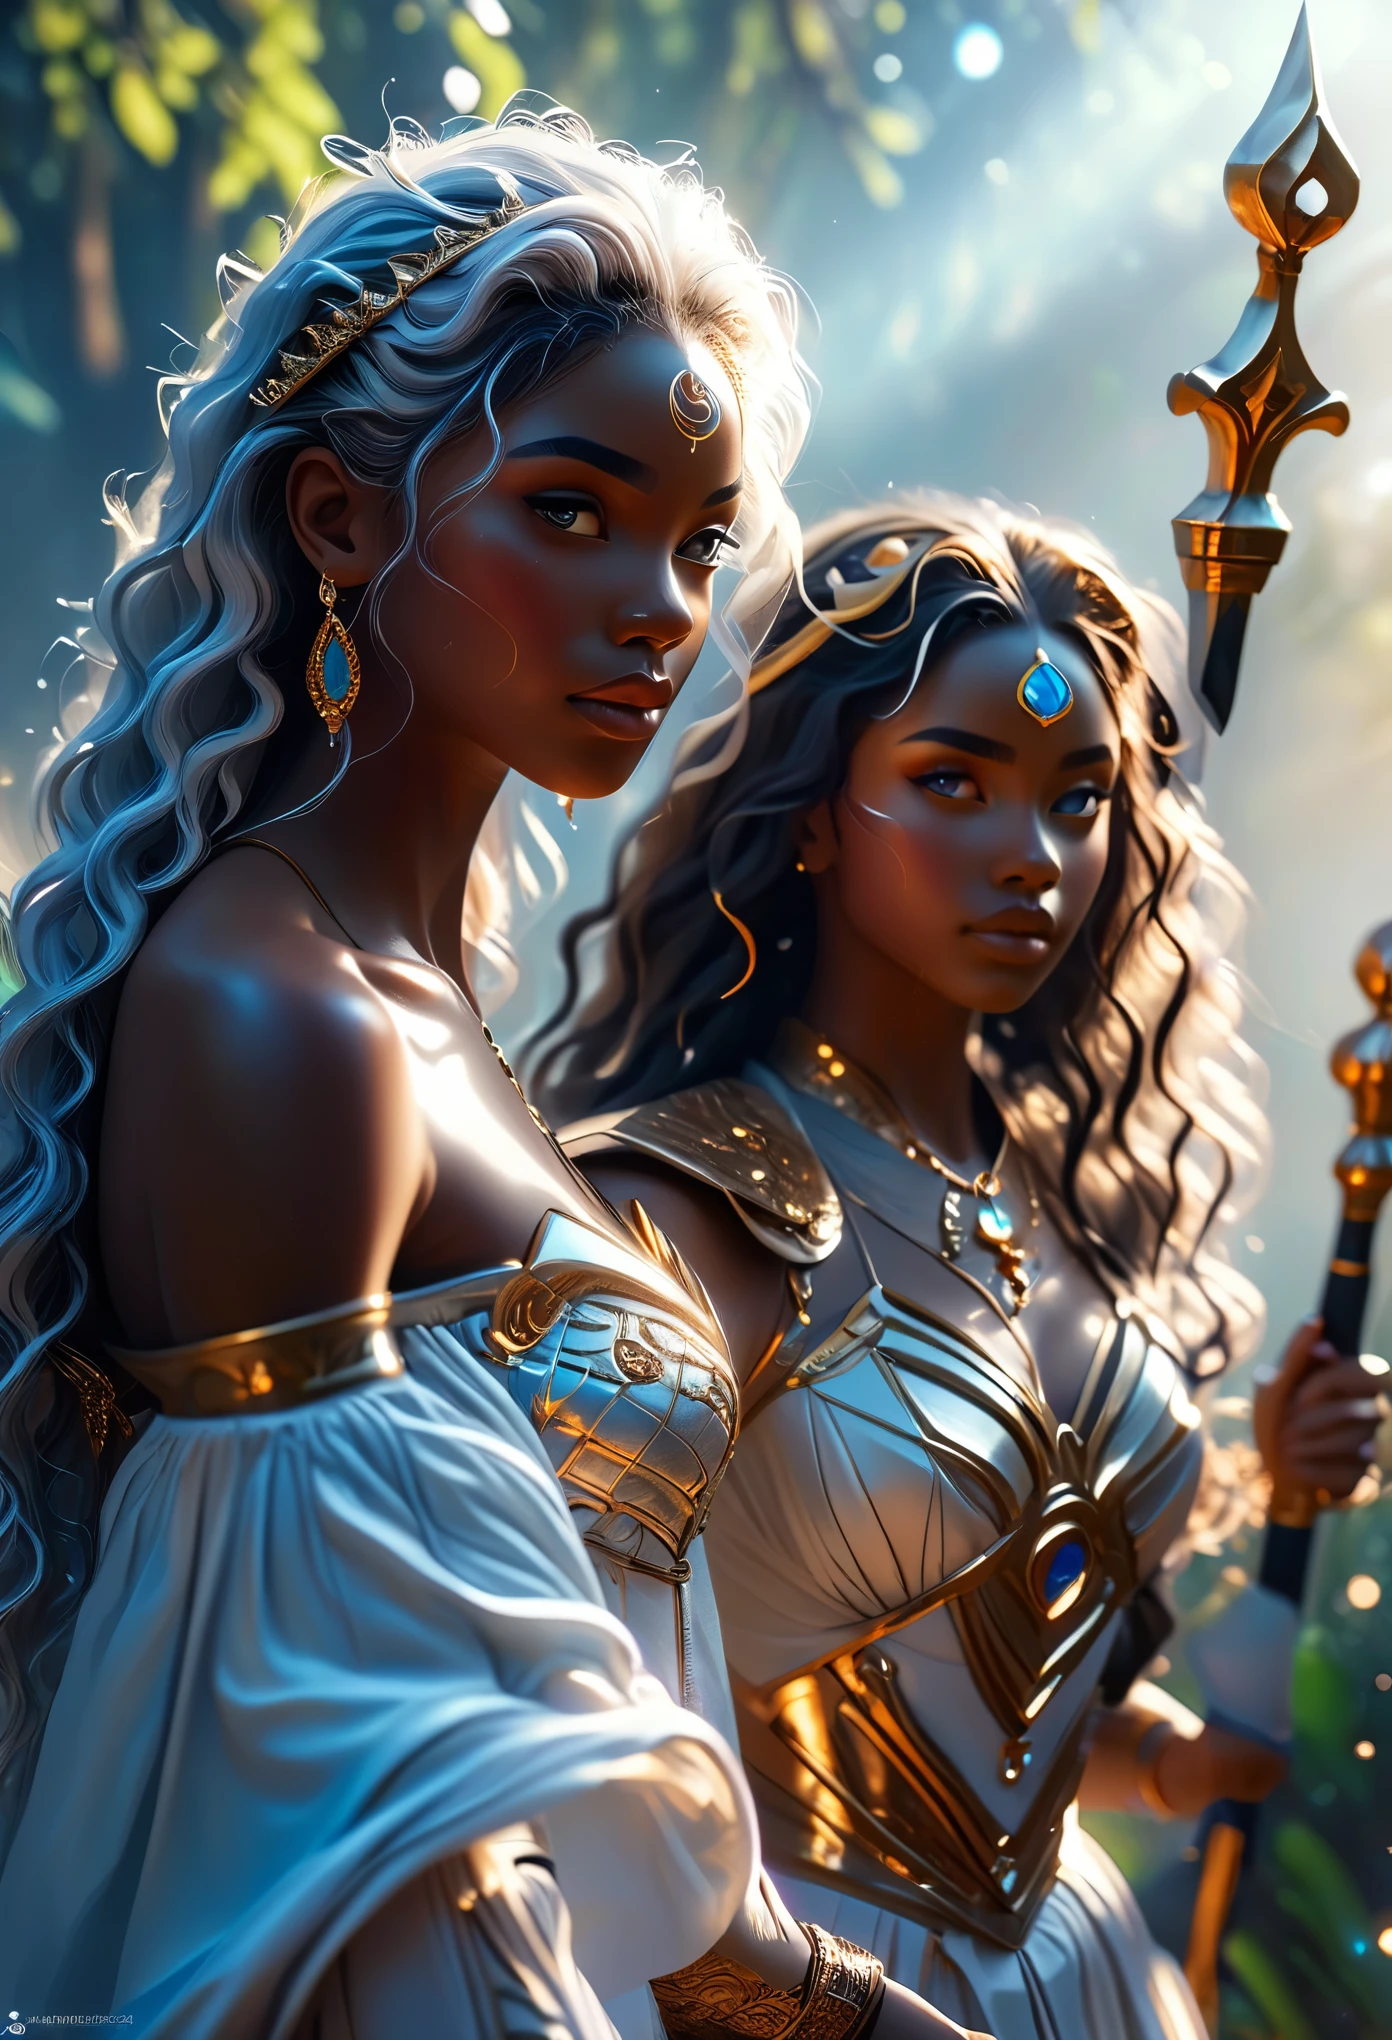 Novel in celestial chaotic l그리고scape, (((close up of a 아름다운 young darkskin couple in 18's))), (a young very 아름다운 pharaon with dark curly hair:1.3) 그리고 (a young very 아름다운 queen with long whitehair:1.7), fighting with swords 그리고 lances 아름다운 visage, (((아름다운))), 완벽한 얼굴, 몸 전체, 상세한 face 그리고 body, 로맨틱한 장면, 로맨틱한 길, 커플 섹시한, 8K, Extremely 상세한, (고품질, 현실적인, photo현실적인: 1.37), 몸 전체, ideal proportions 그리고 defined complexion, 세심하게 디자인된 기능, inaccessible 아름다운ty, 라 완벽, chef 미술istique&#39;작품&#39;미술s, 생생한 현실감, sculptures hyper 상세한es, formes 현실적인s, 정말 놀라운, 완벽한 노하우, 순수한 빛, ethereal 아름다운ty, 섬세한 윤곽, 눈에 띄는 포즈, sublime 아름다운ty, 미묘한 뉘앙스, 동적 구성, 밝은 색, 완벽한 조명, 움직이는 표현, 천상의 아우라, 장엄한 존재감, 꿈같은 분위기, 렌더링&#39;octane 상세한 inégalé, tendance sur 미술station, Photographie 미술istique 8k, photo현실적인 concept 미술, 자연스러운, 부드러운, 볼류메트릭 시네마틱 퍼펙트 라이트, 키아로스쿠로, 수상 경력이 있는 사진, 머리&#39;작품&#39;미술, 아름다운, 상세한, 복잡한, 엄청나게
